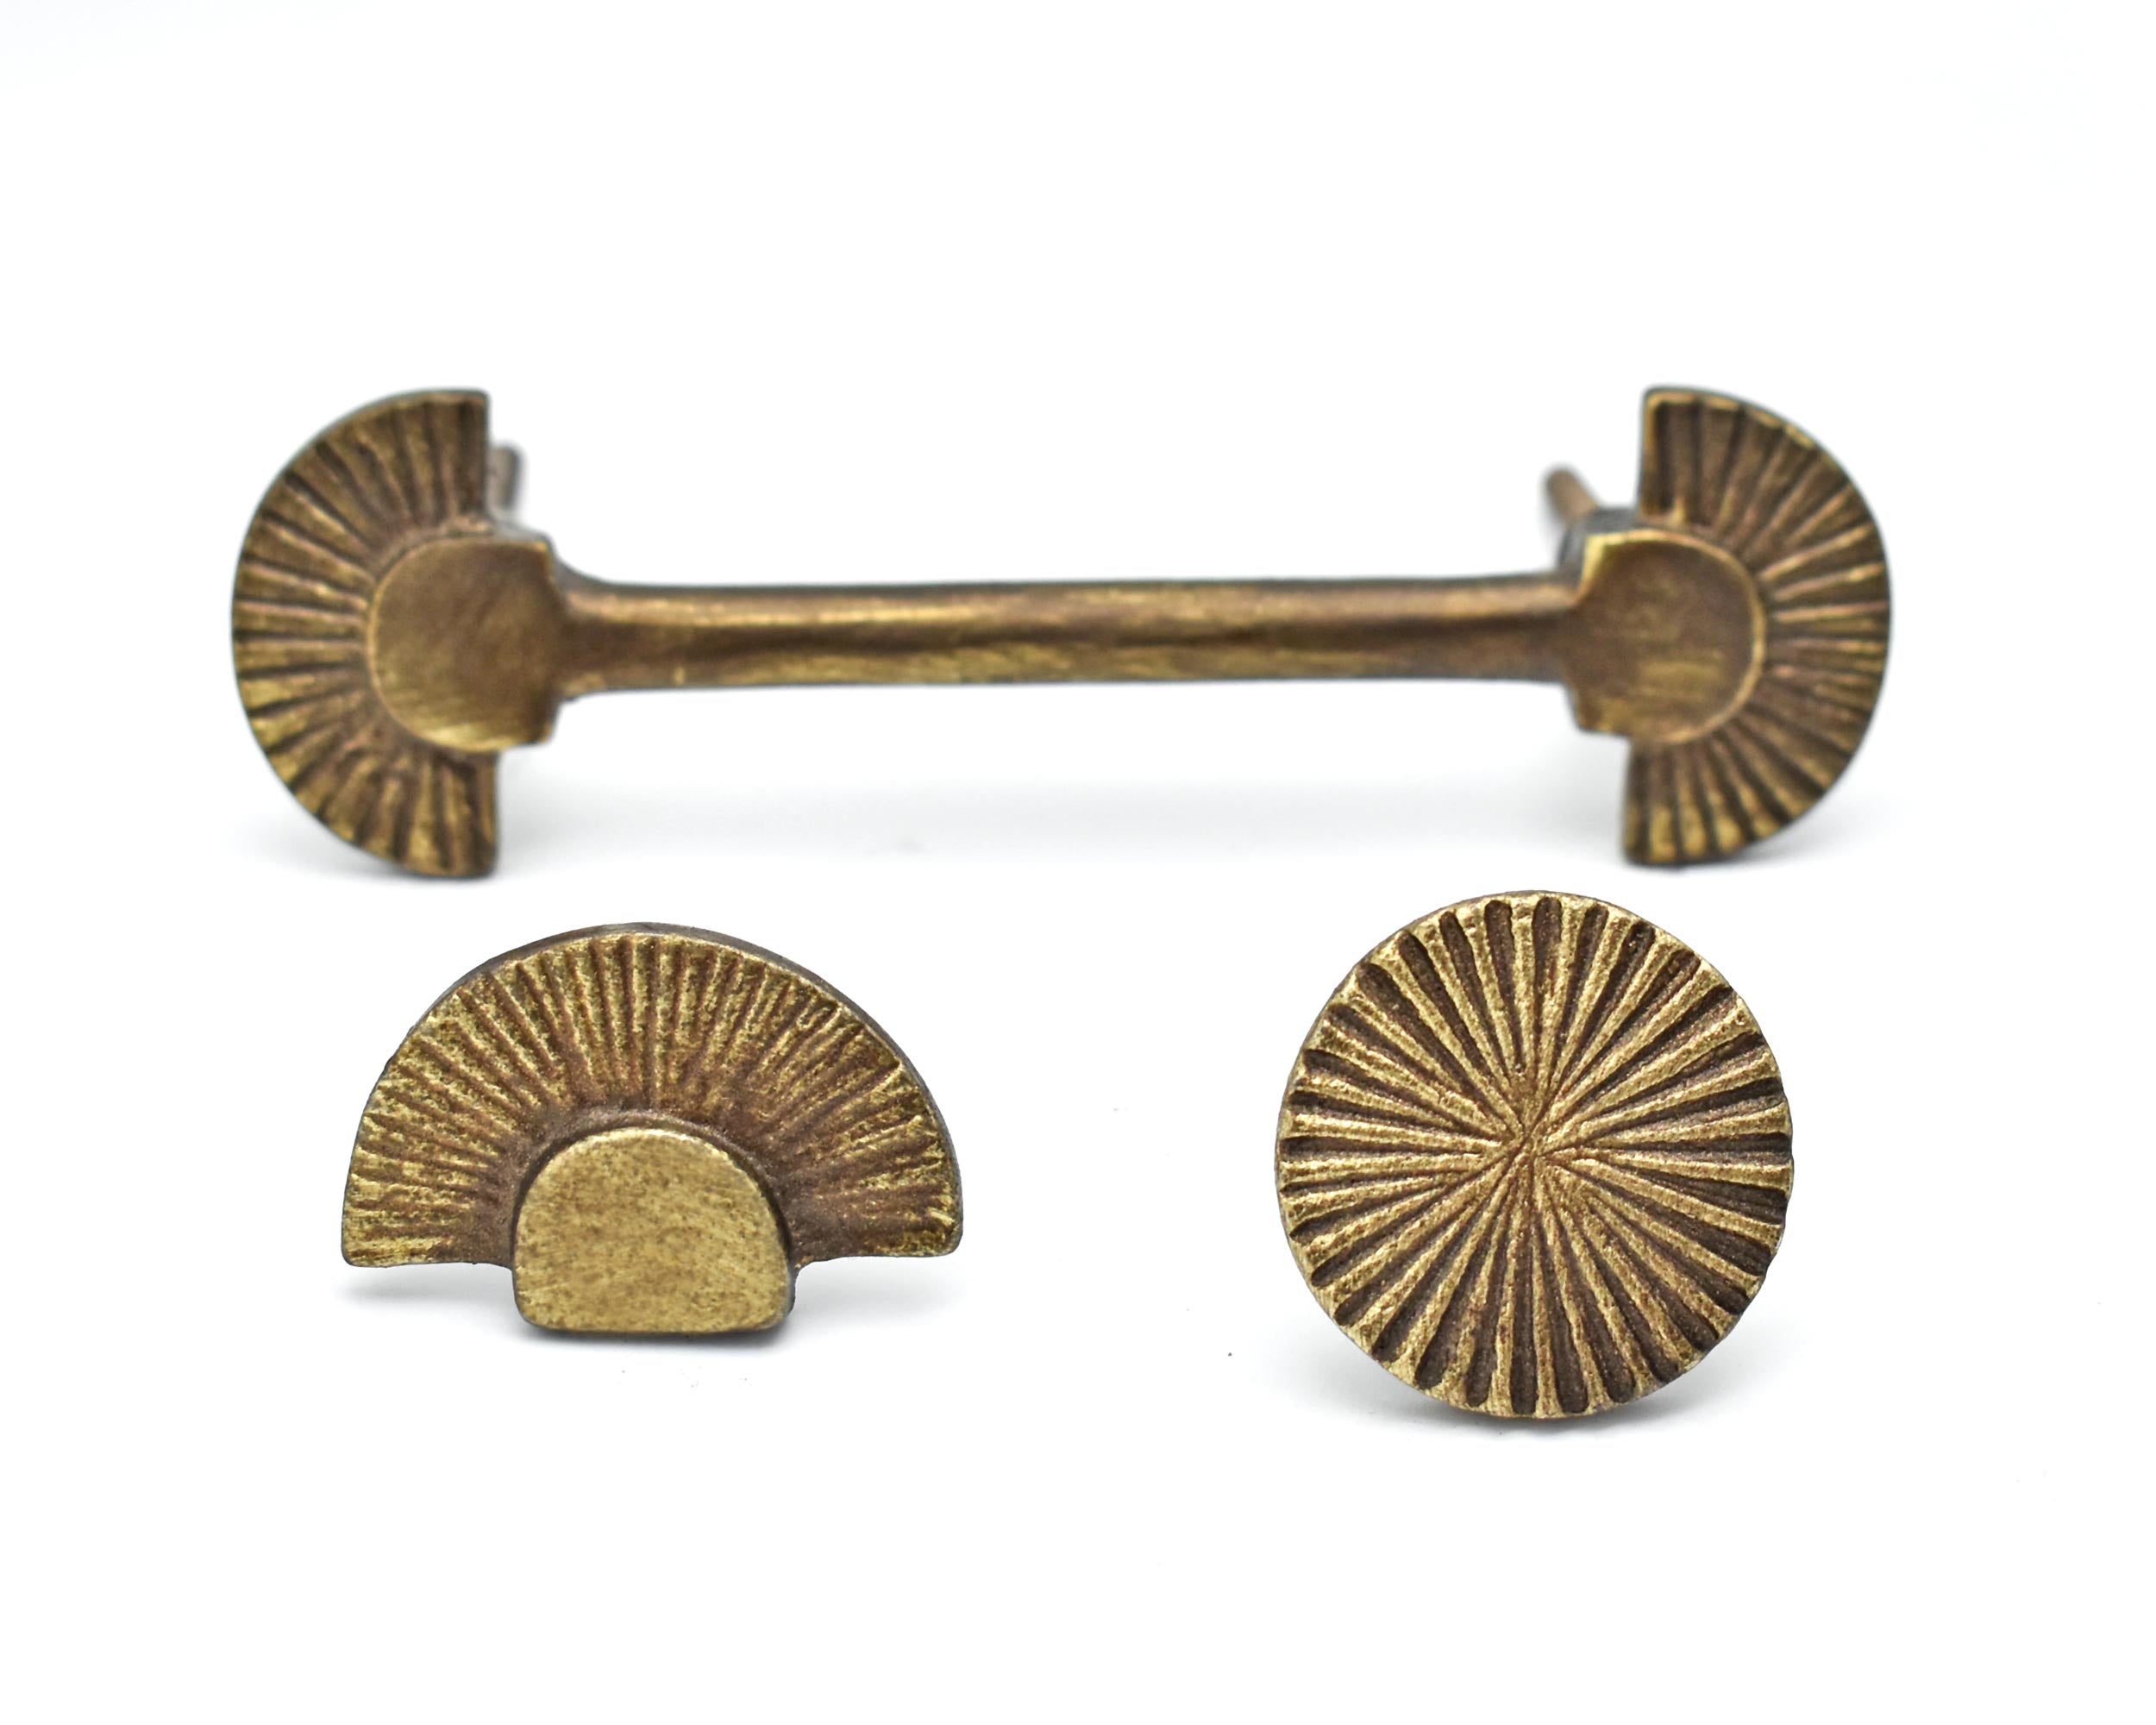 Antique Door Knobs Brass Small Gold/Bronze Closet Drawer Cabinet